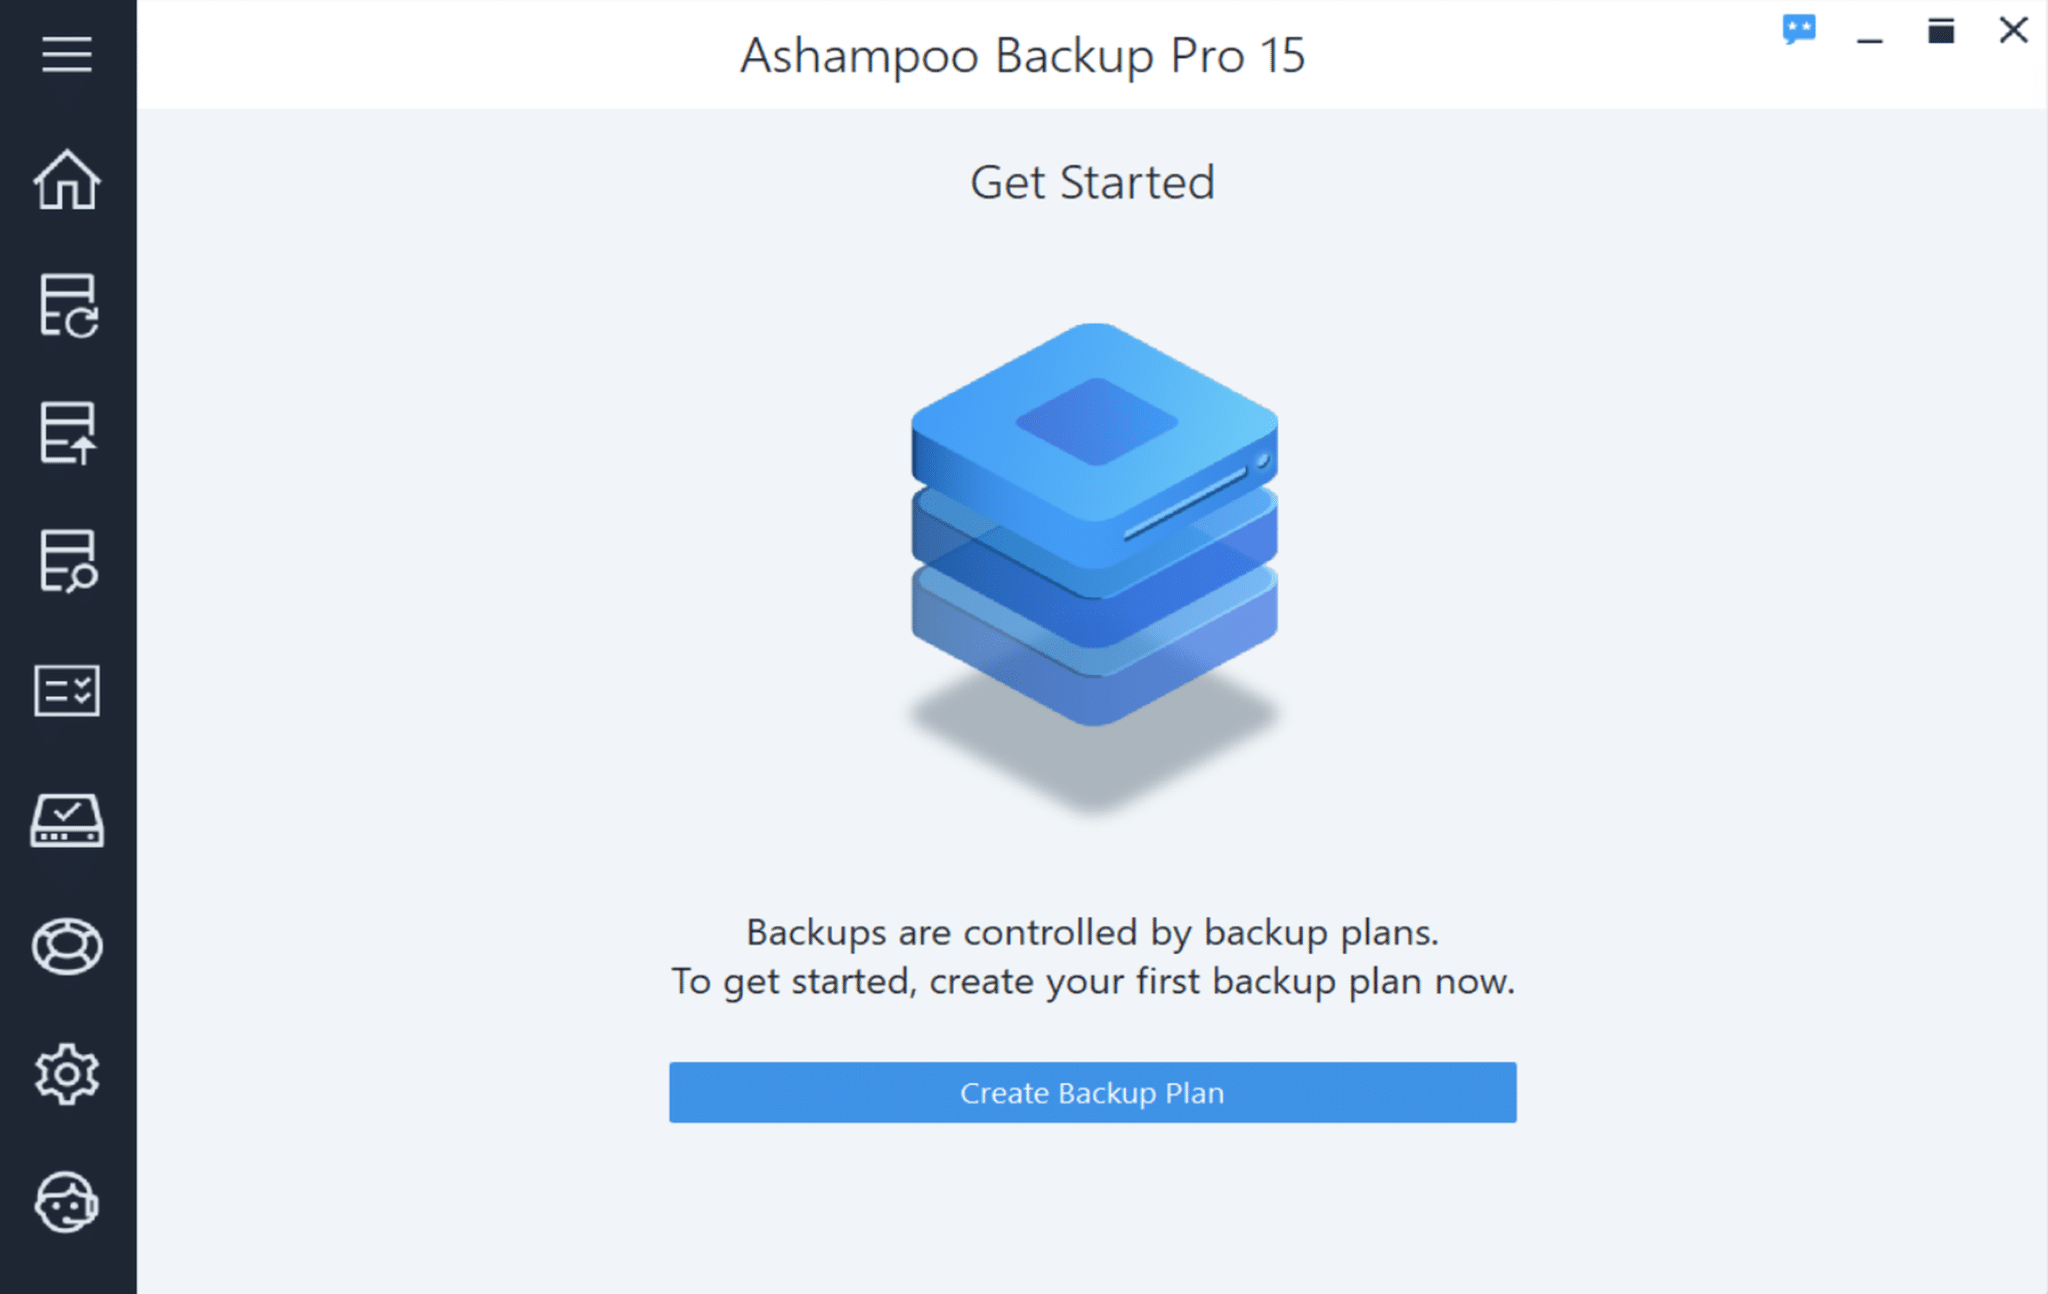 download the last version for mac Ashampoo Backup Pro 17.08